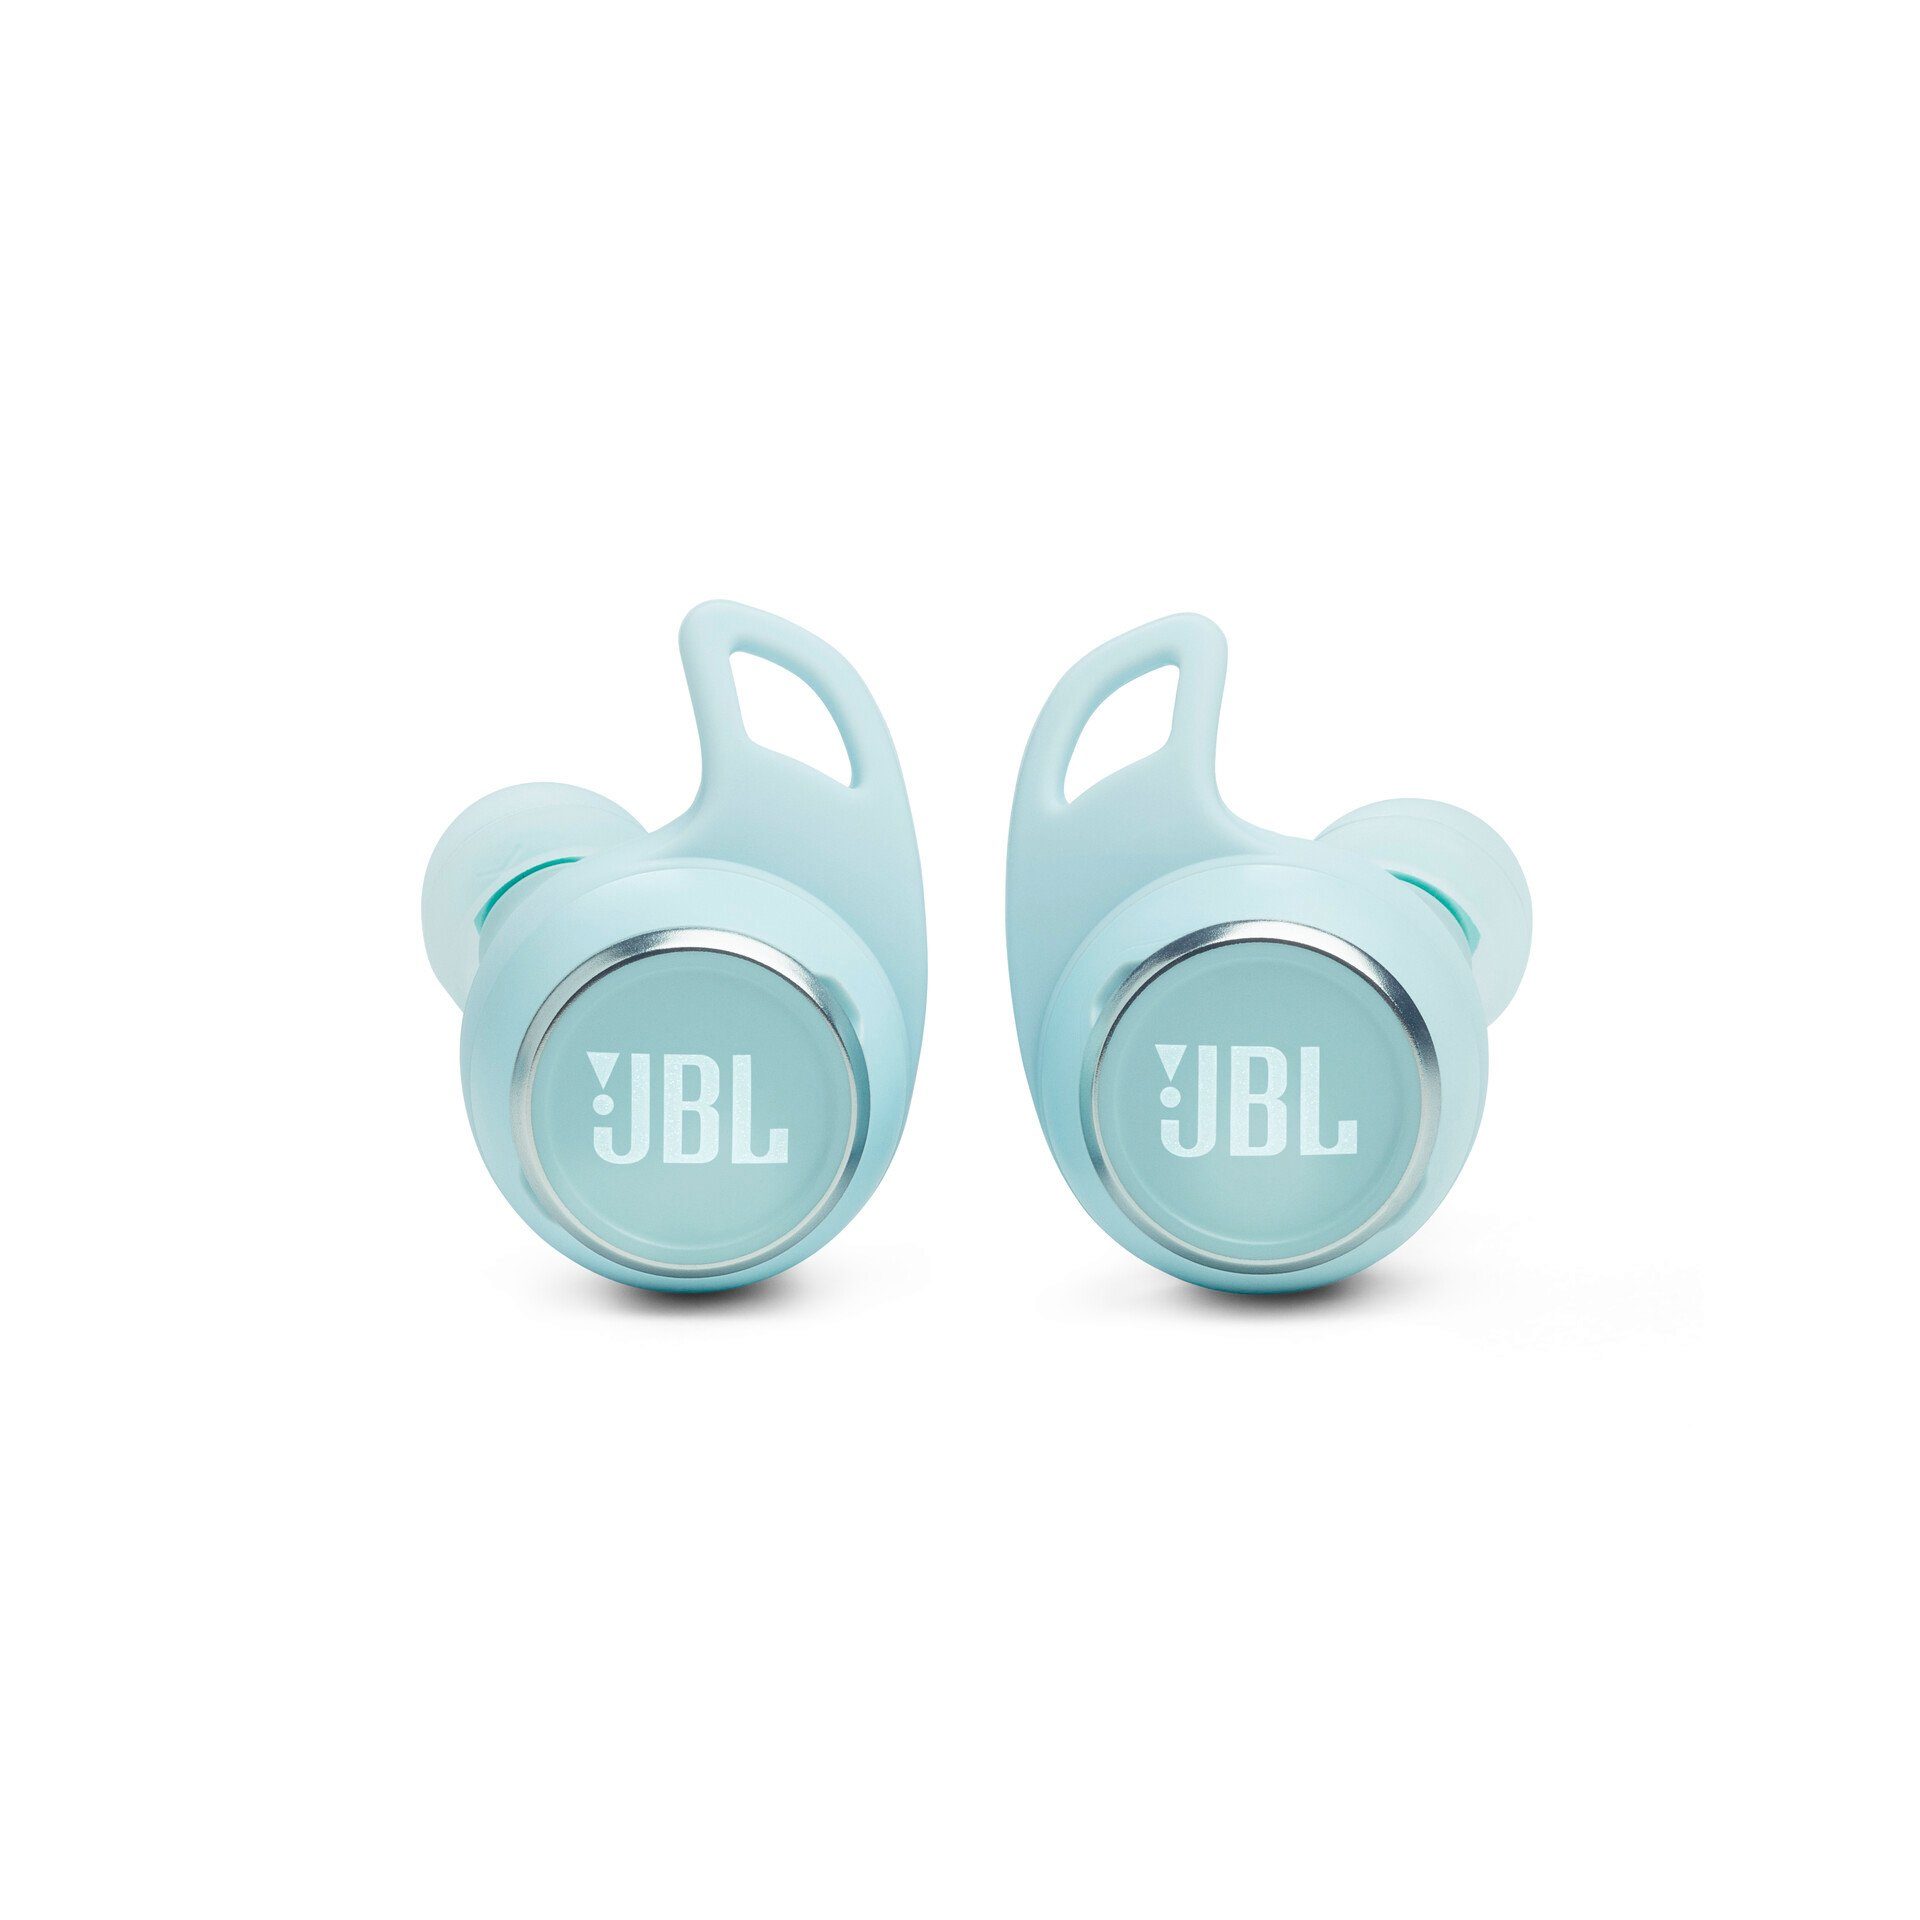 mit Reflect JBL Noise-Cancelling In-Ear-Kopfhörer, aktive Komplett kabellose wireless Ohrhörer Aero